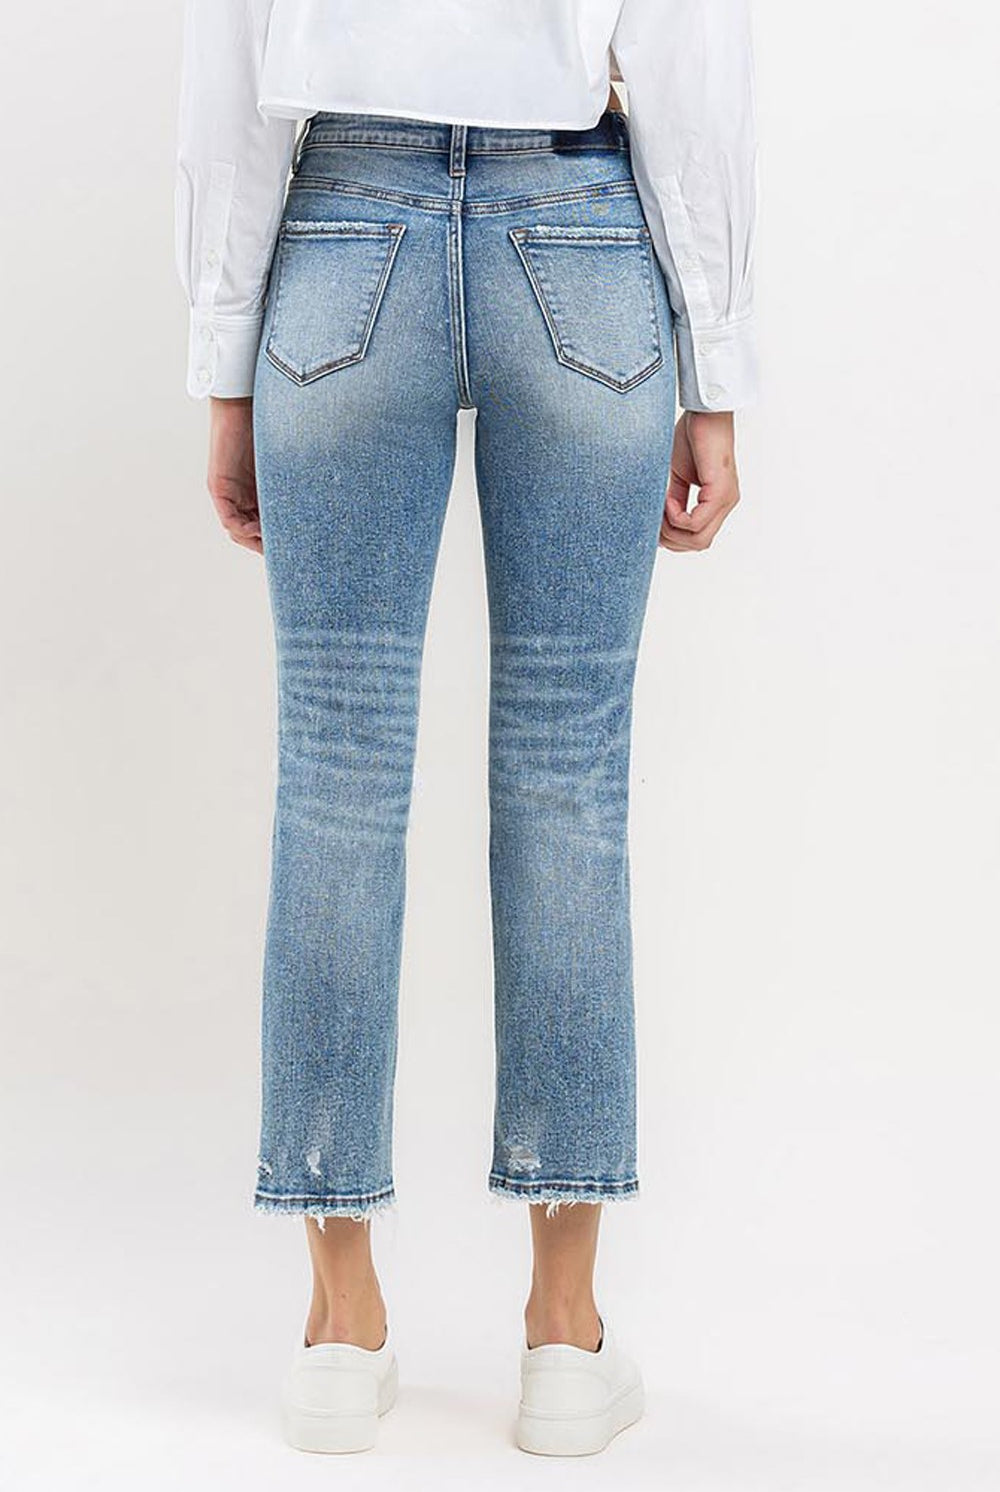 Women's Lovervet distressed jeans.